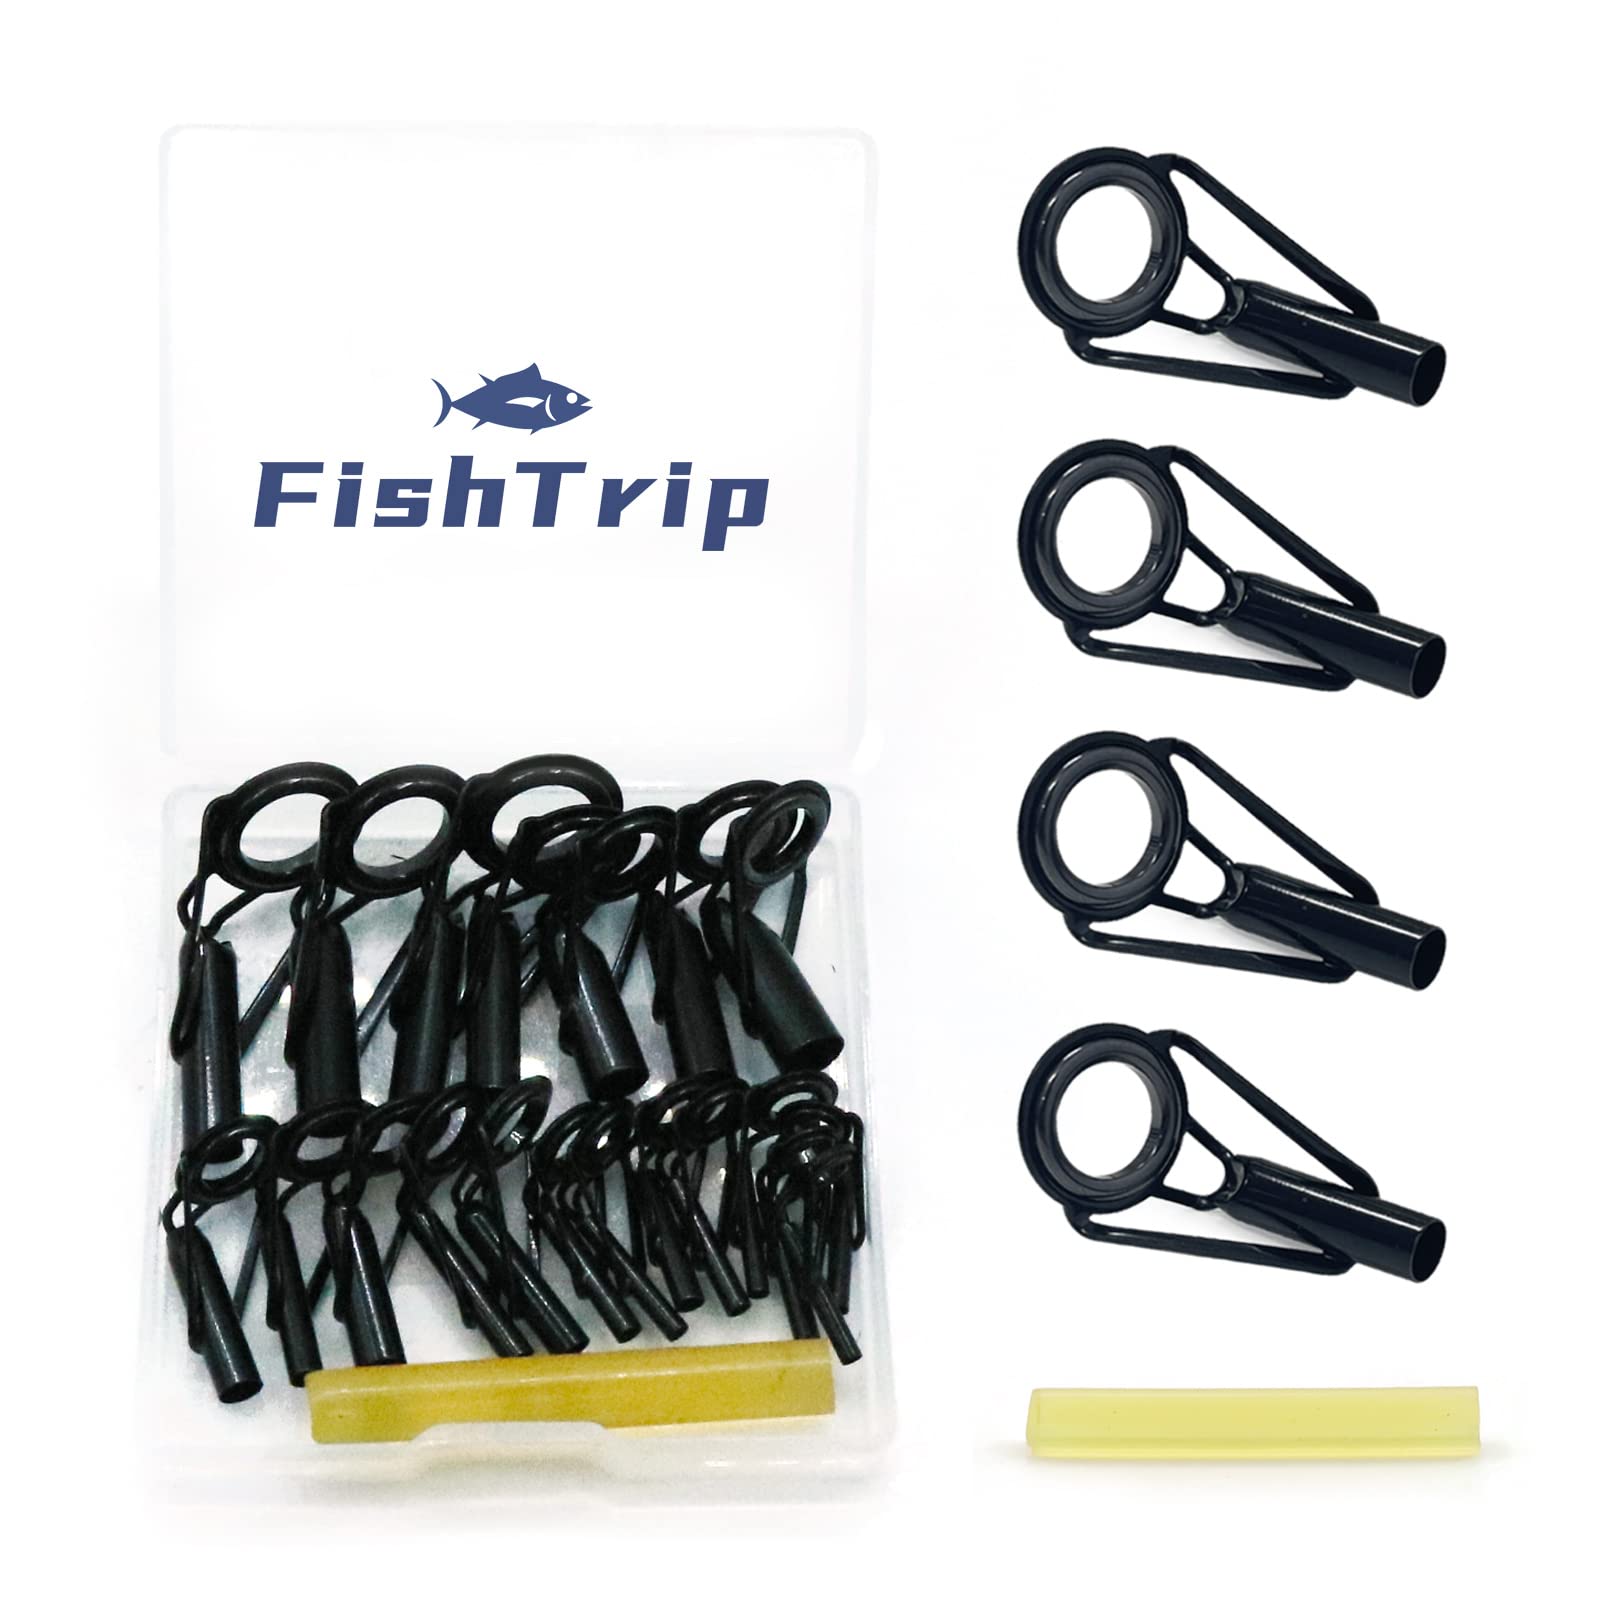 FishTrip Fishing Rod Repair Kit Complete with Epoxy,10pcs Carbon